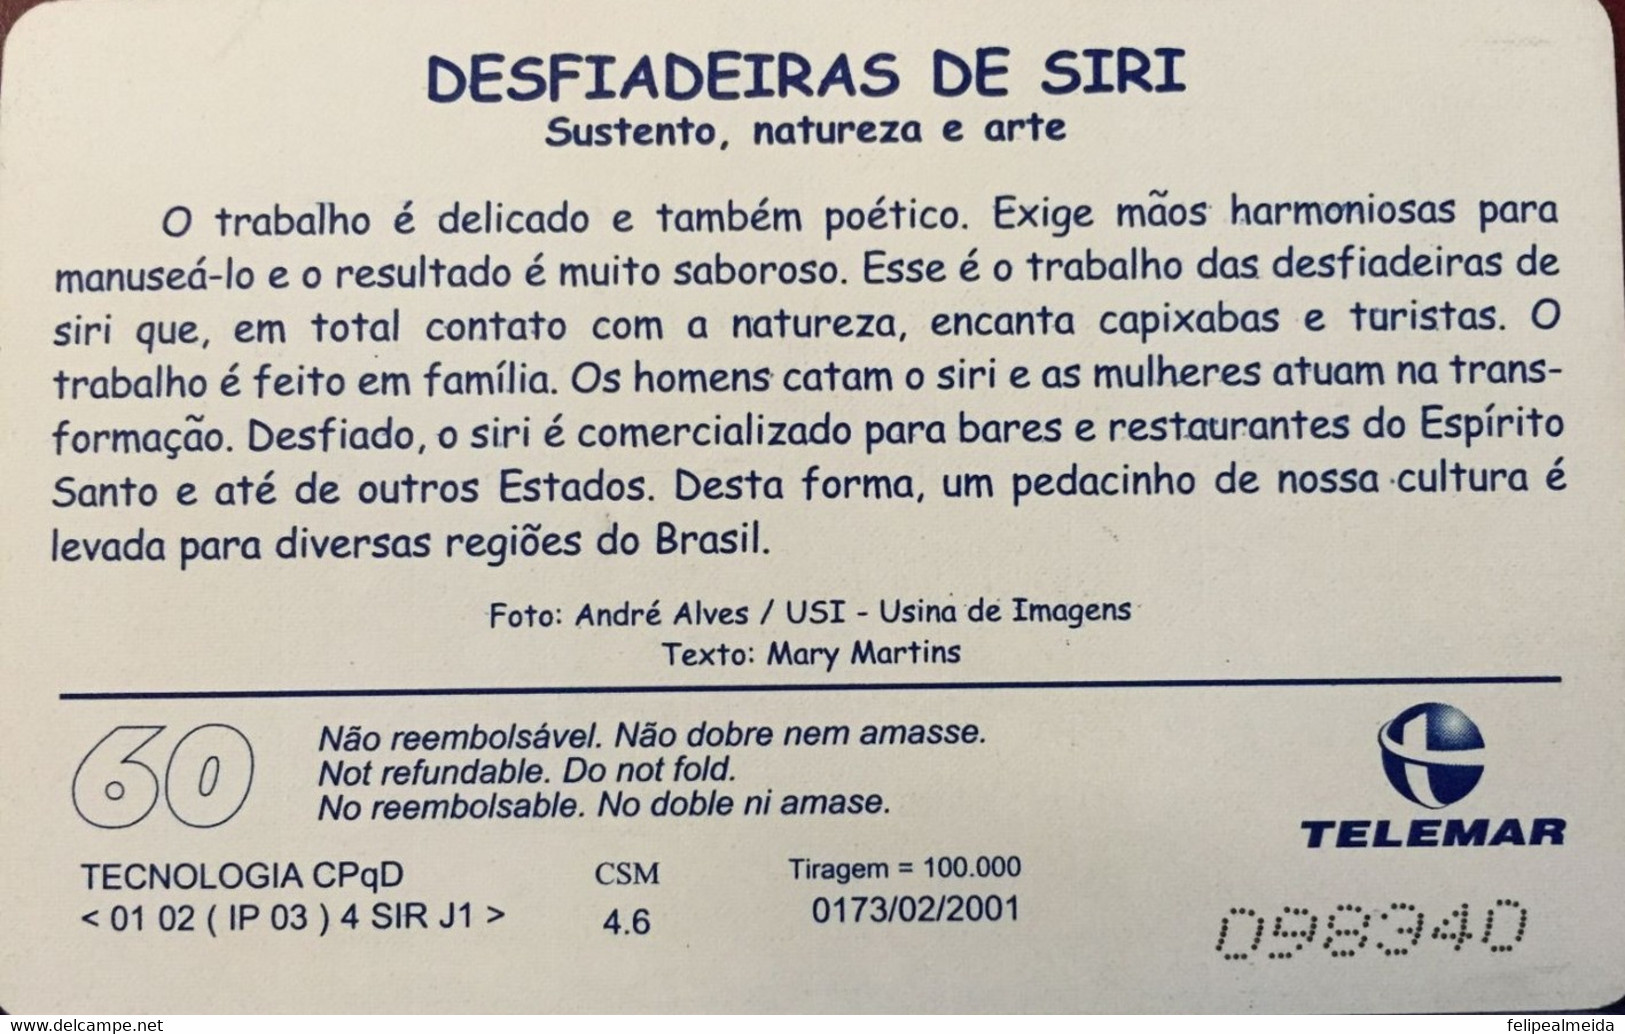 Phone Card Manufactured By Telemar In 2001 - Desfiadeiras De Siri - Sustenance, Nature And Art - Alimentation